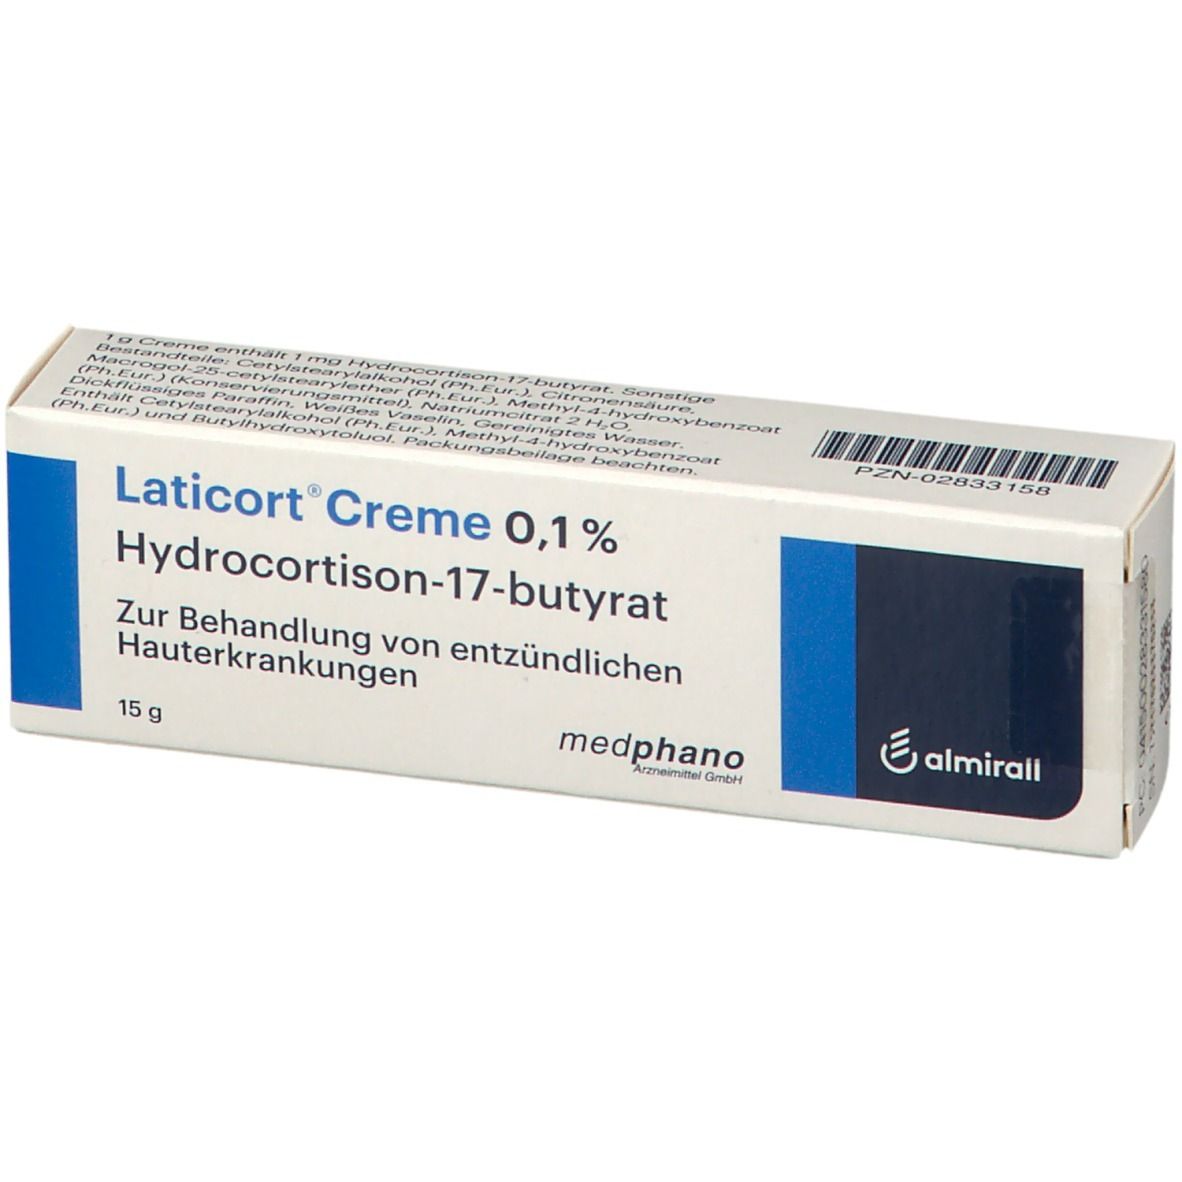 Laticort® Creme 0,1%